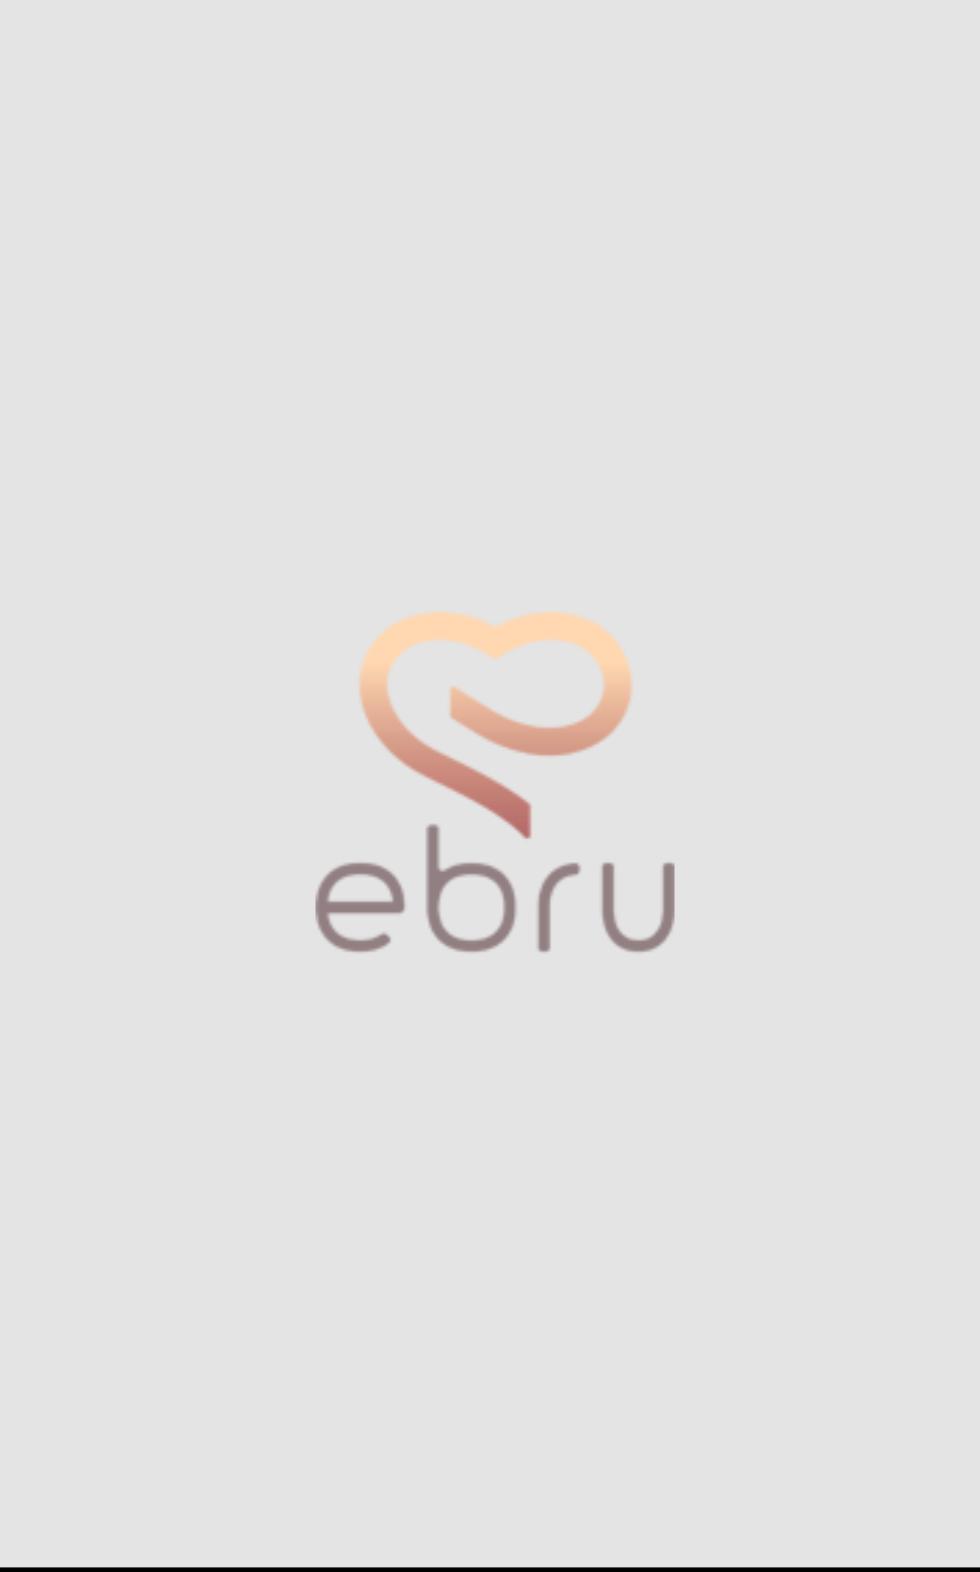 Ebru For Android Apk Download - roblox ebru